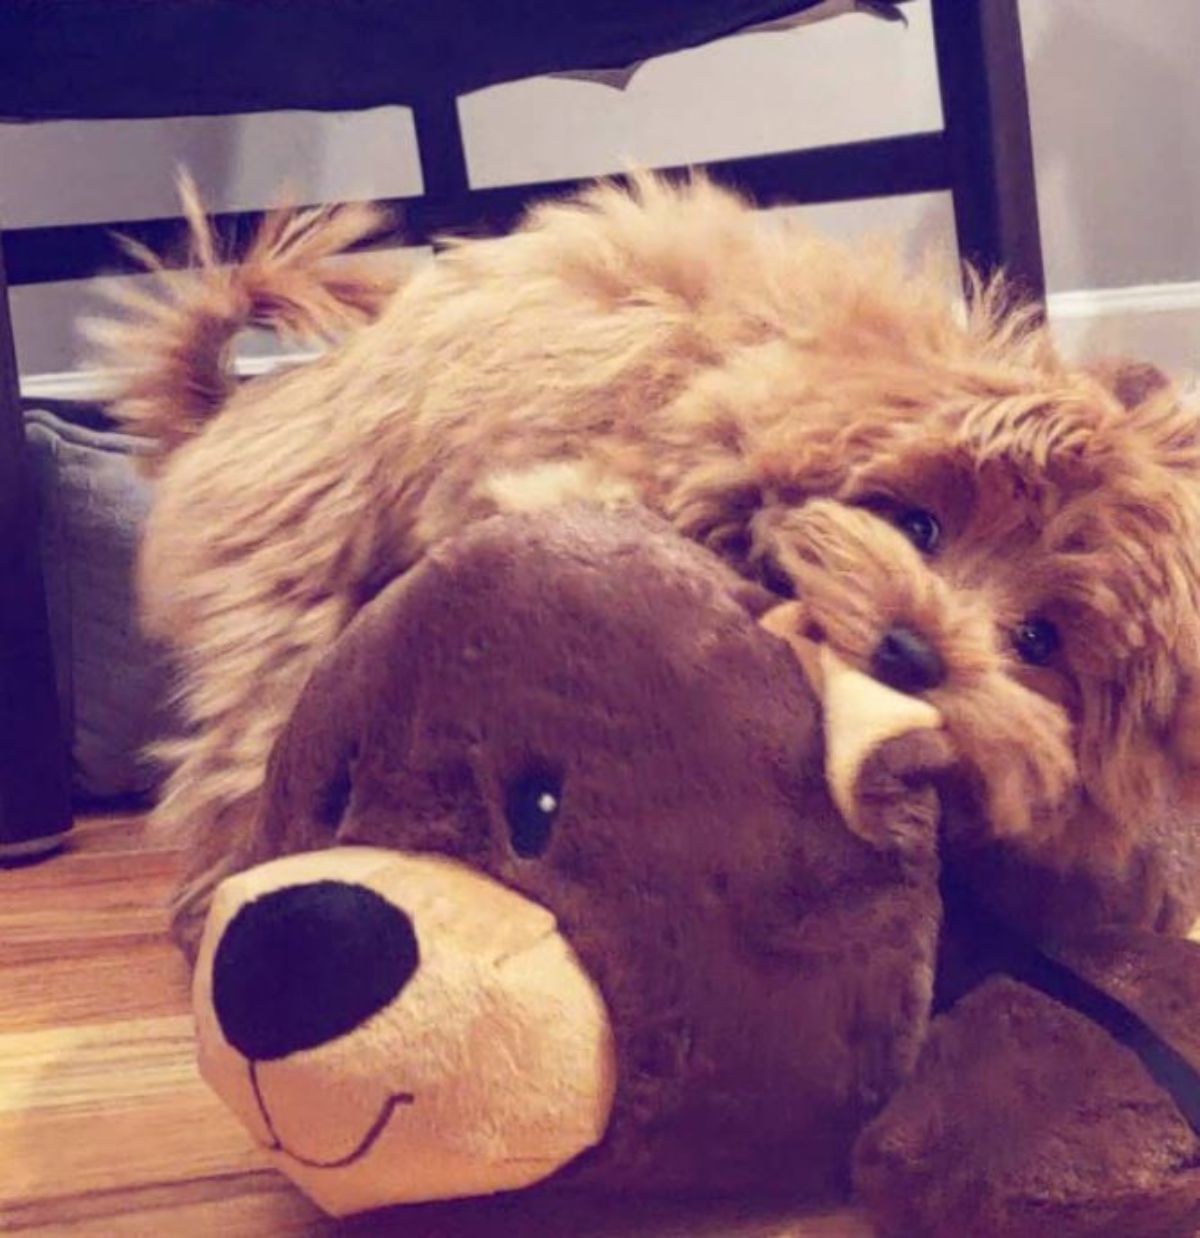 maltipoo dog biting the ears of its teddy bear stuffed toy